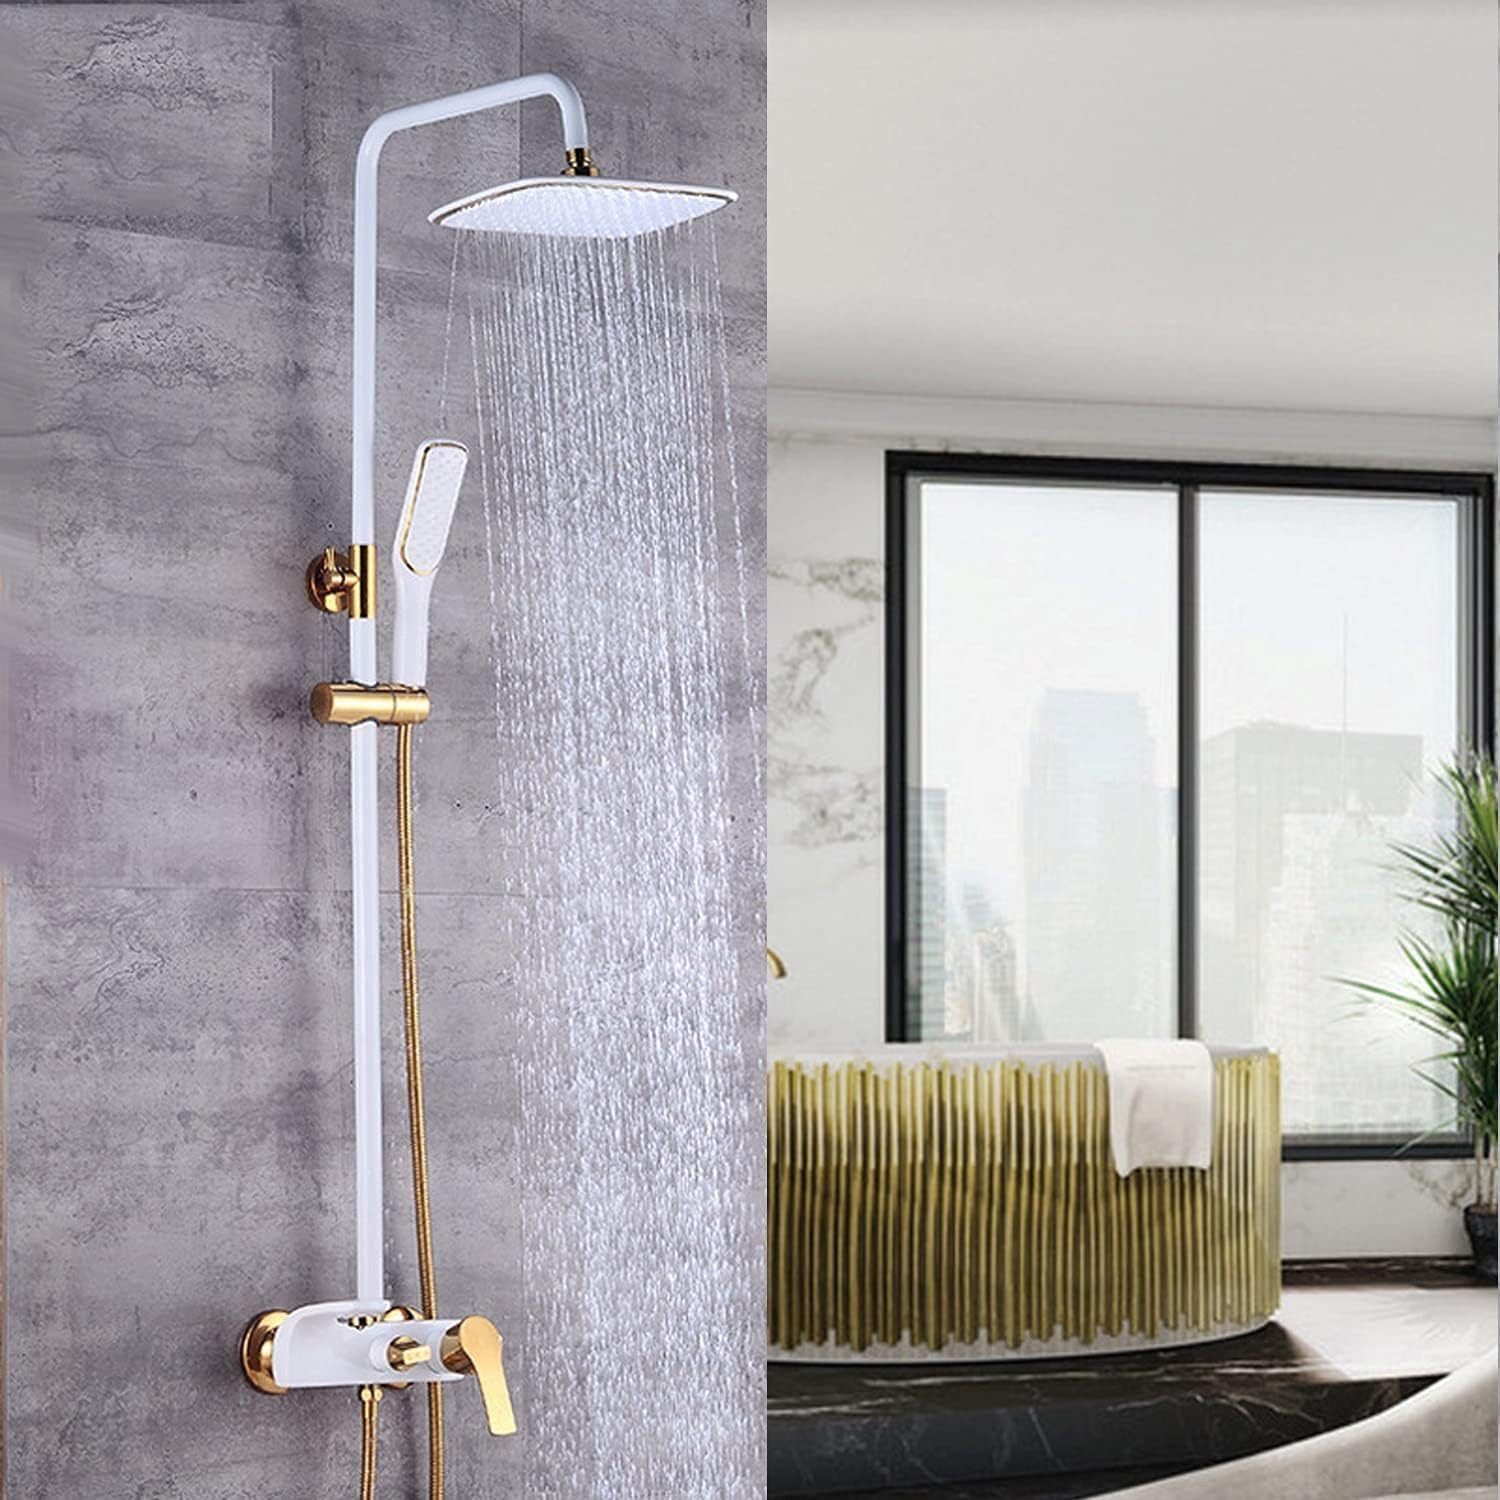 QJUZO Duschsystem Duschsäule Wasserhahn Regendusche Duscharmatur, Duschkopf Duschsystem inkl Handbrause Shower Set Höhenverstellbar